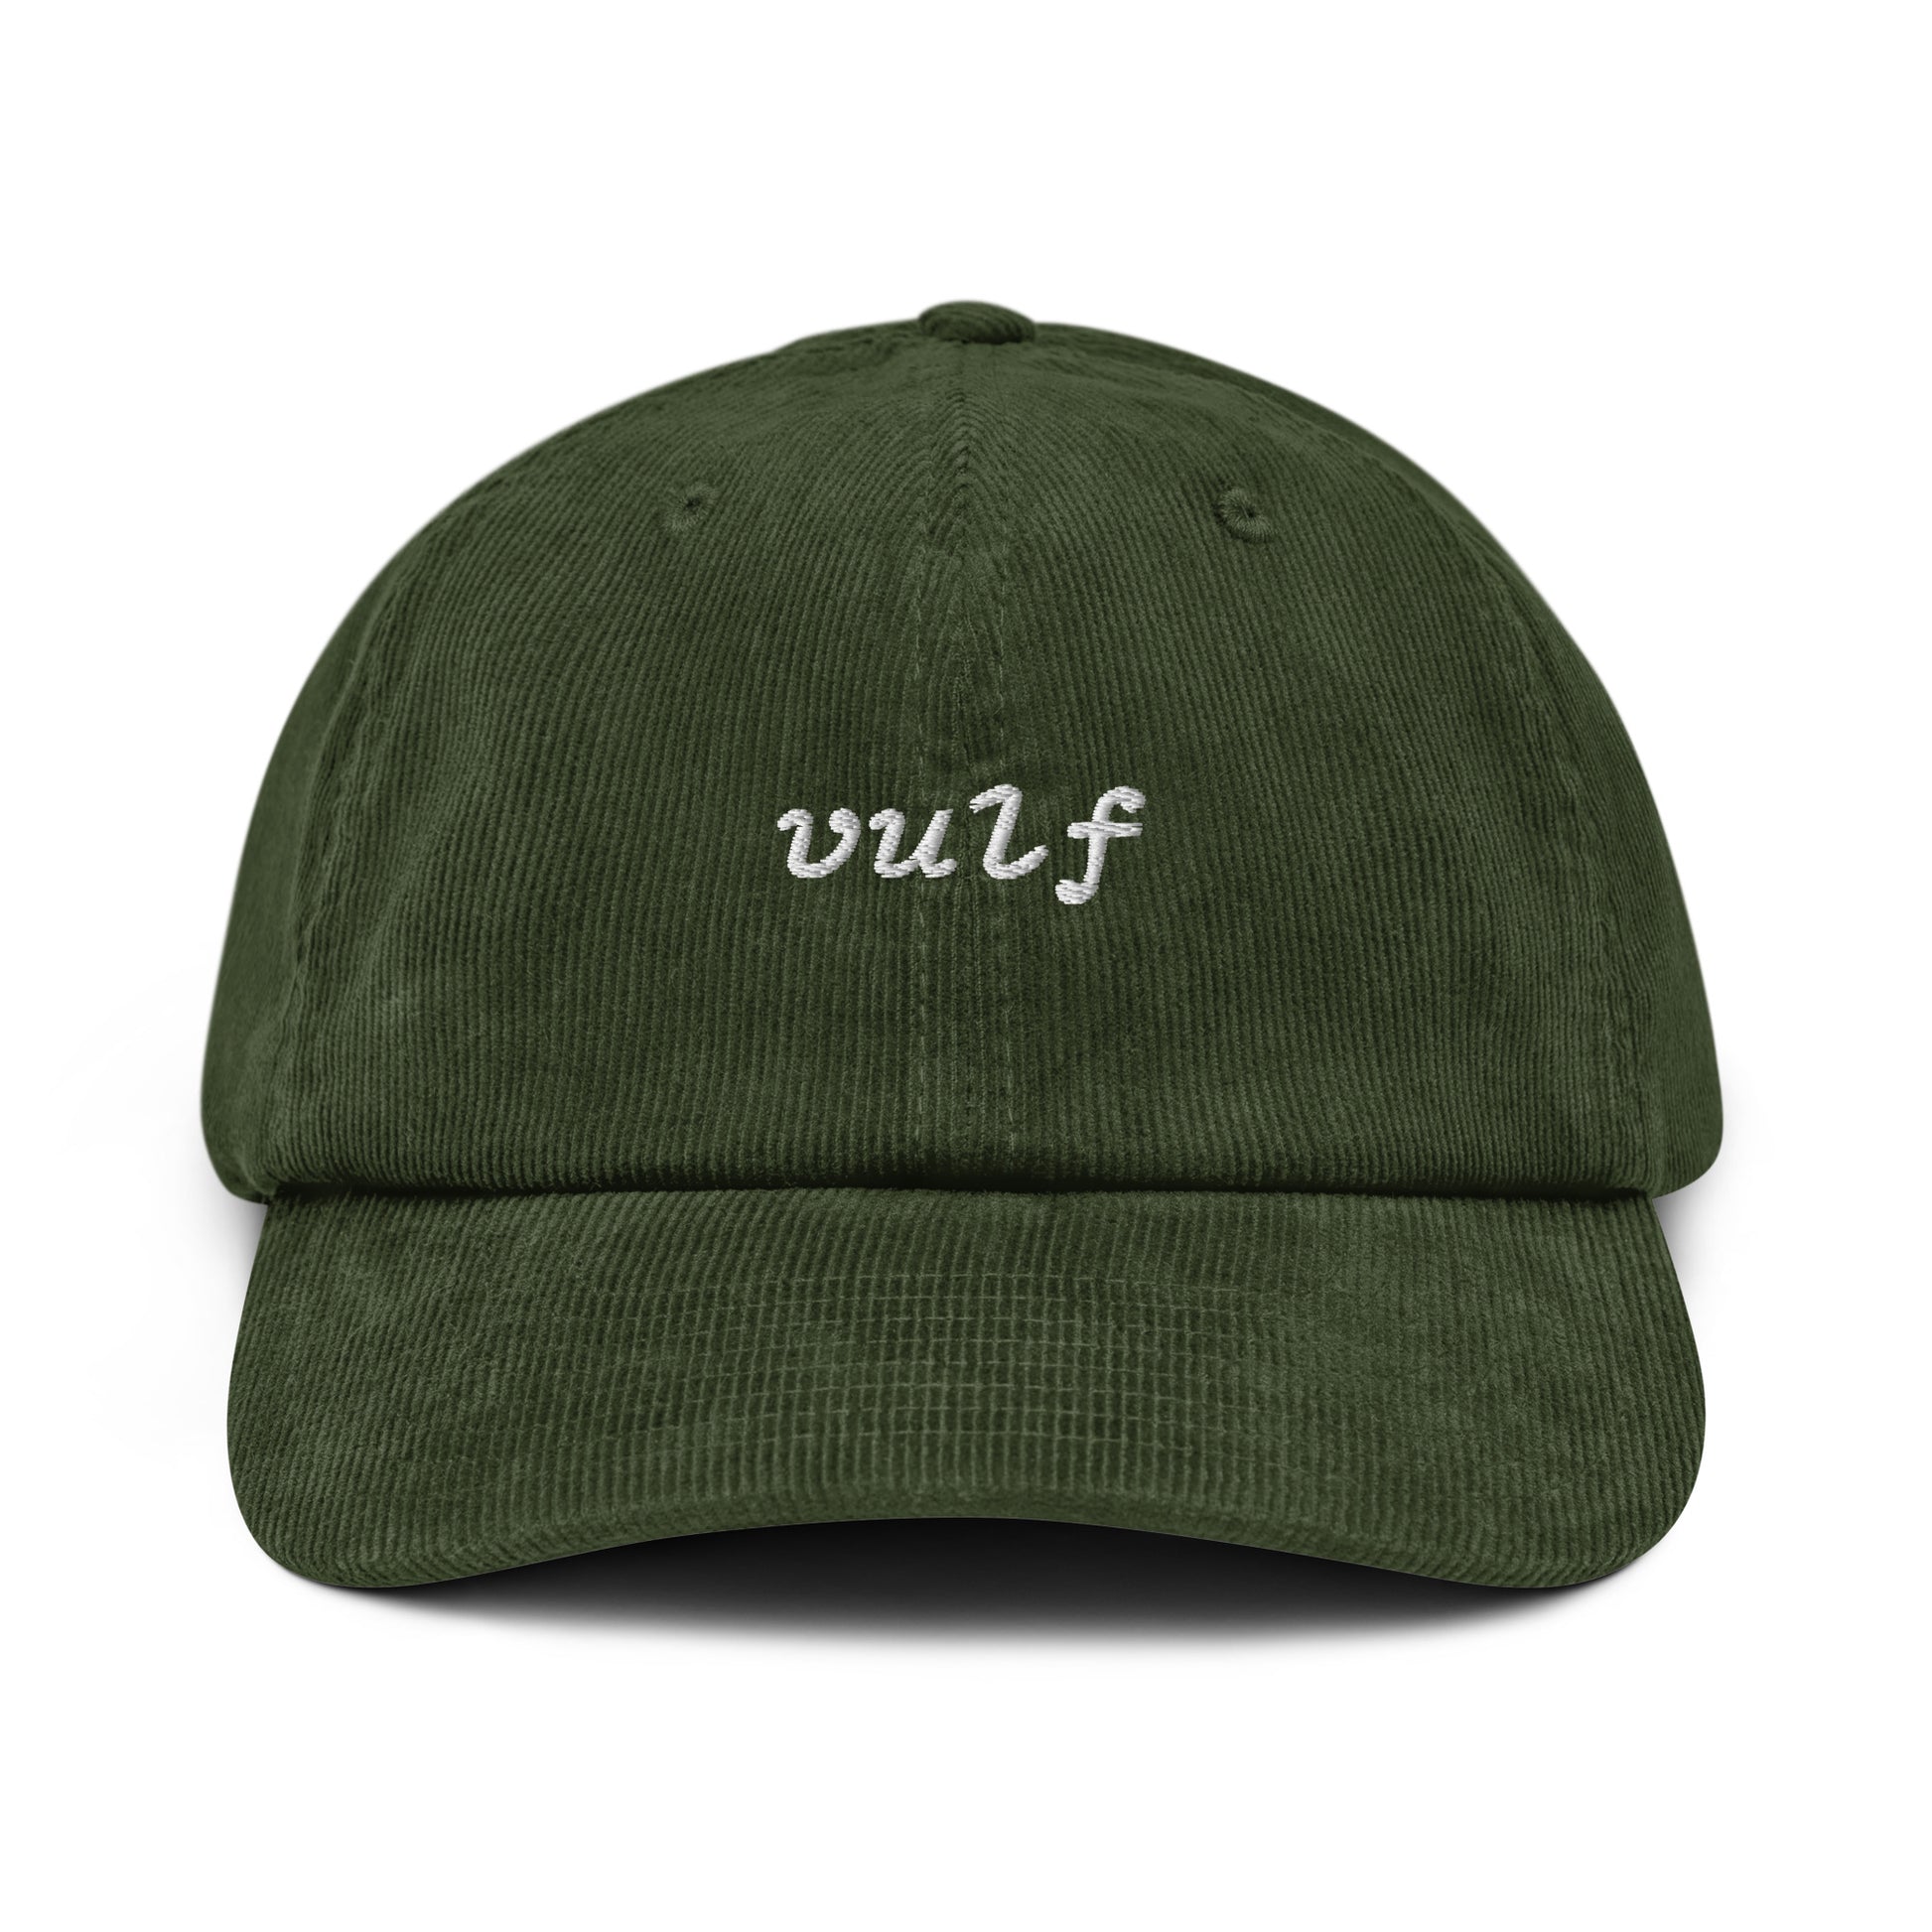 Green The Hat vulftank –